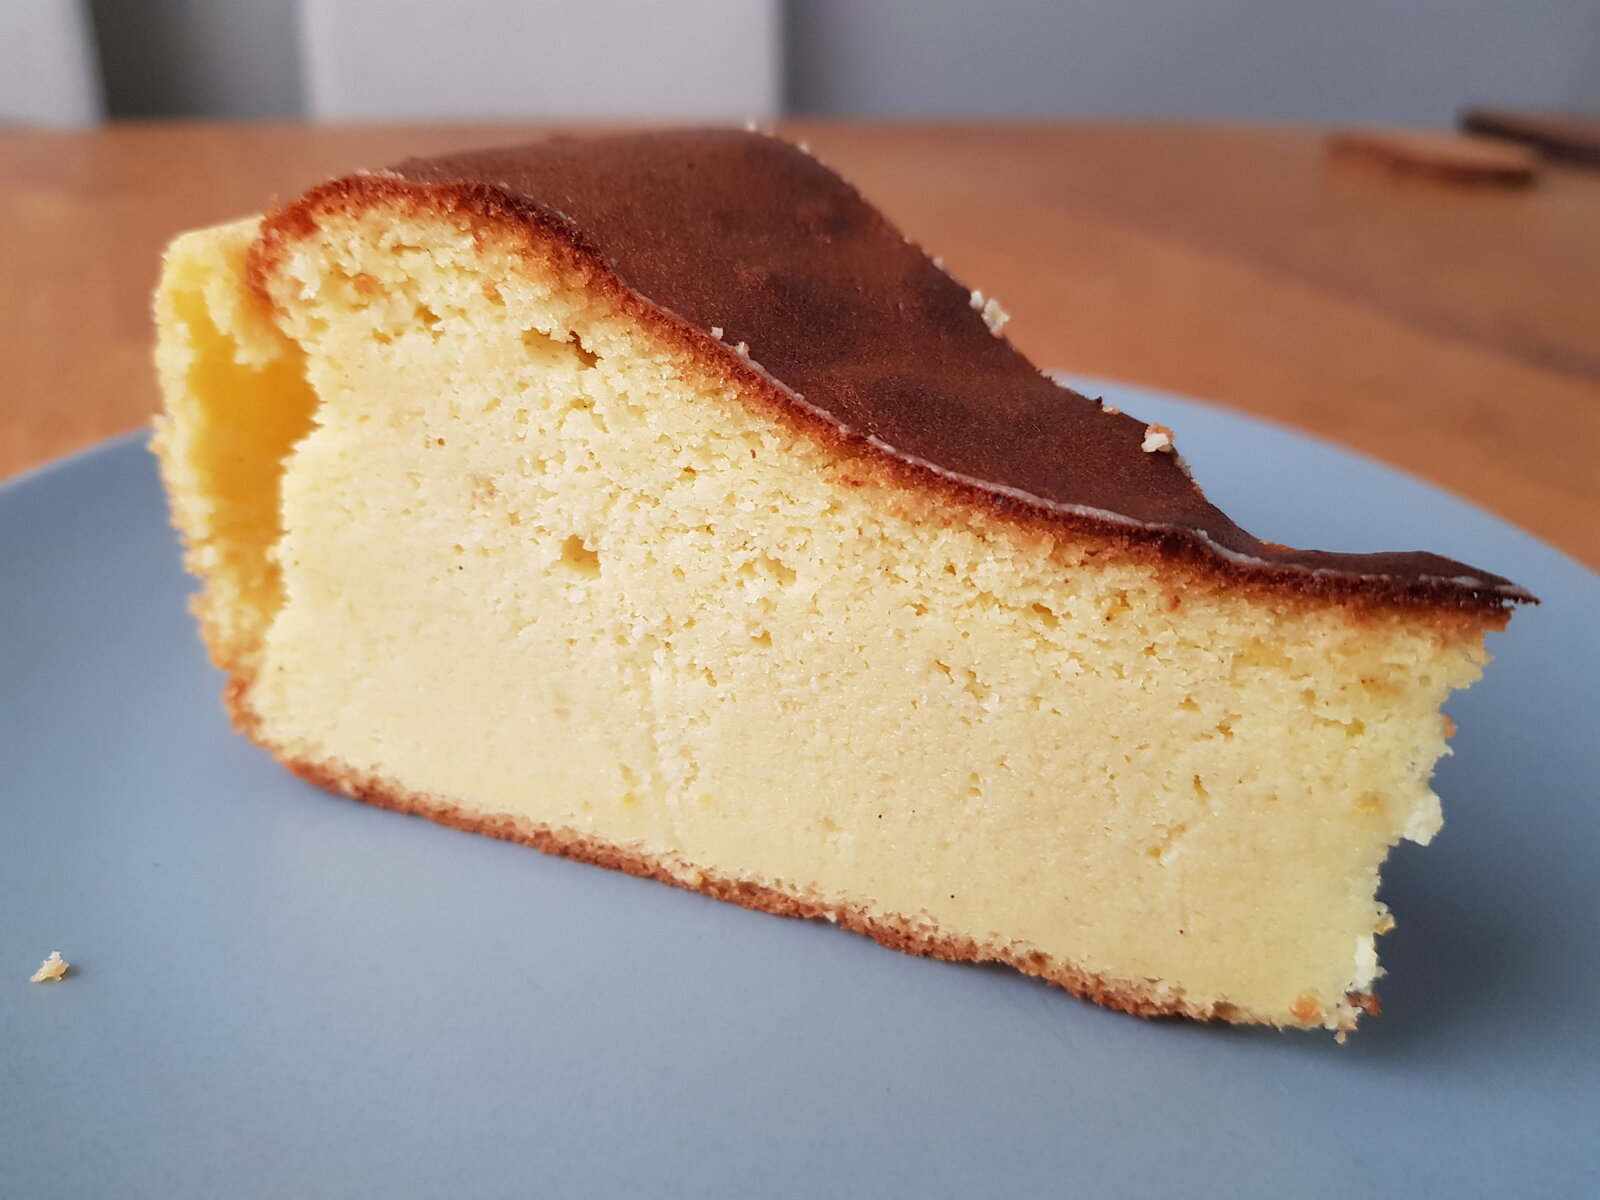 A Slice of Lemon Potato Cake (minus the lemon drizzle at this stage)